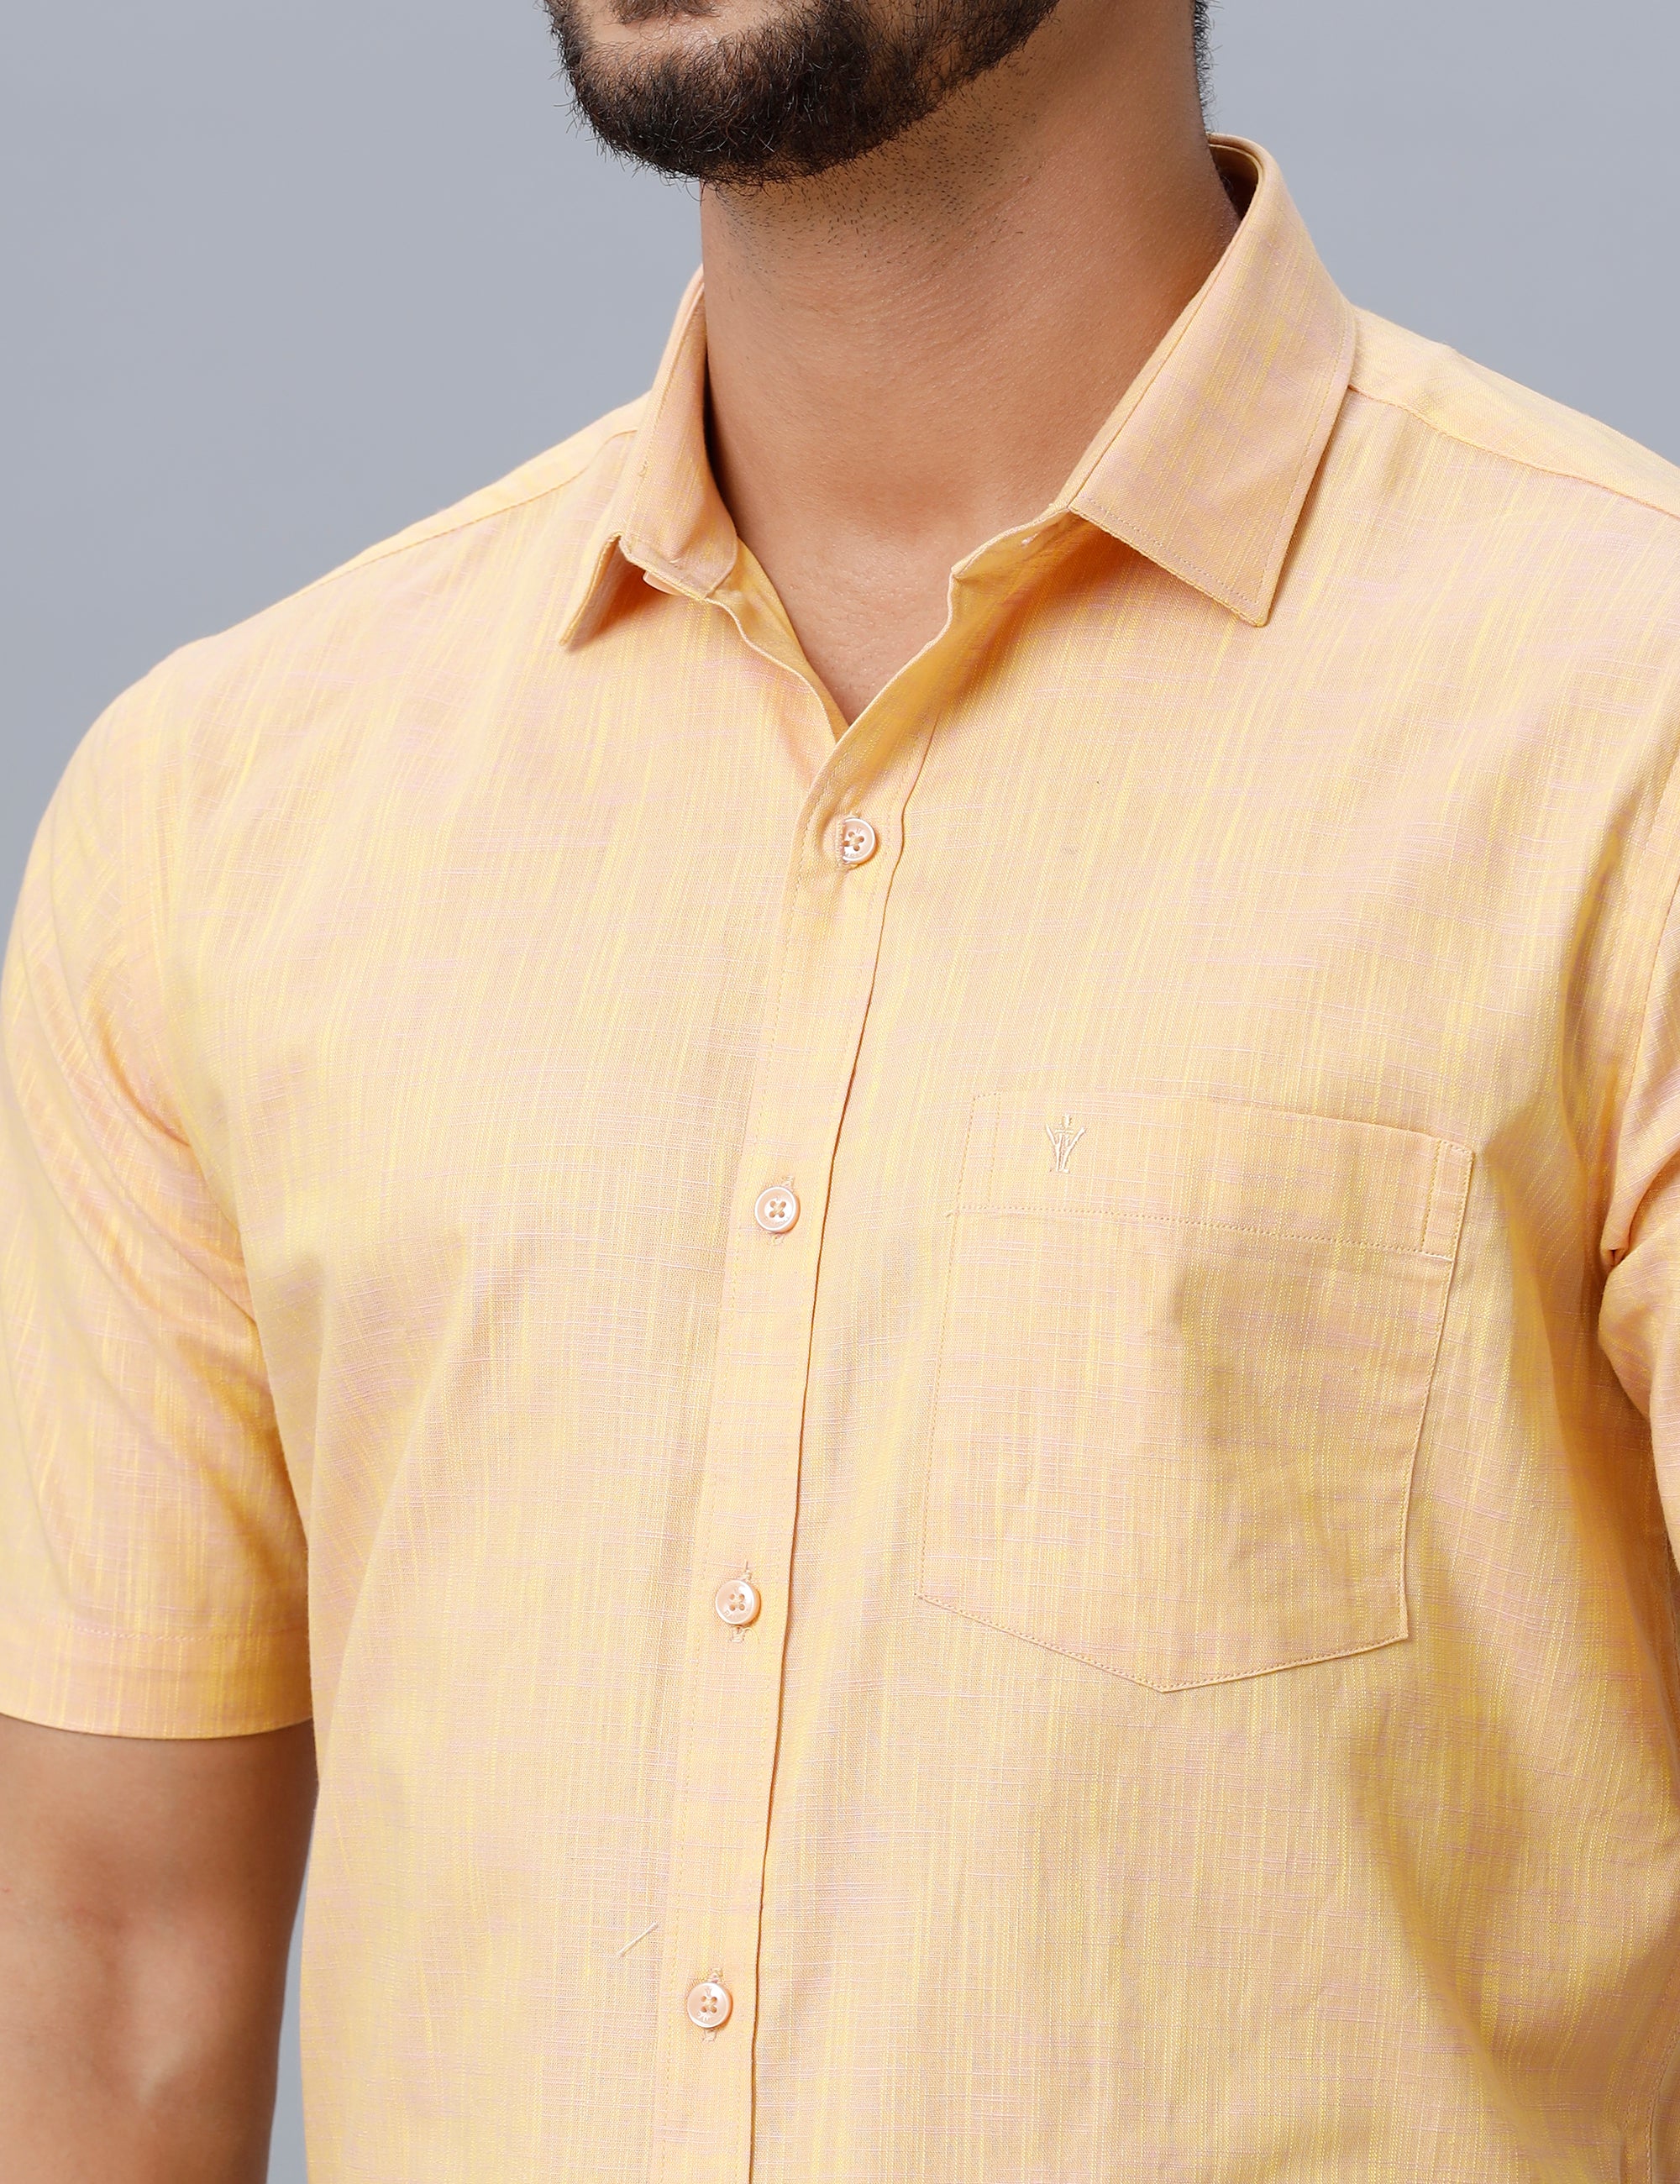 Mens Formal Shirt Half Sleeves Light Orange CL2 GT16-Zoom view